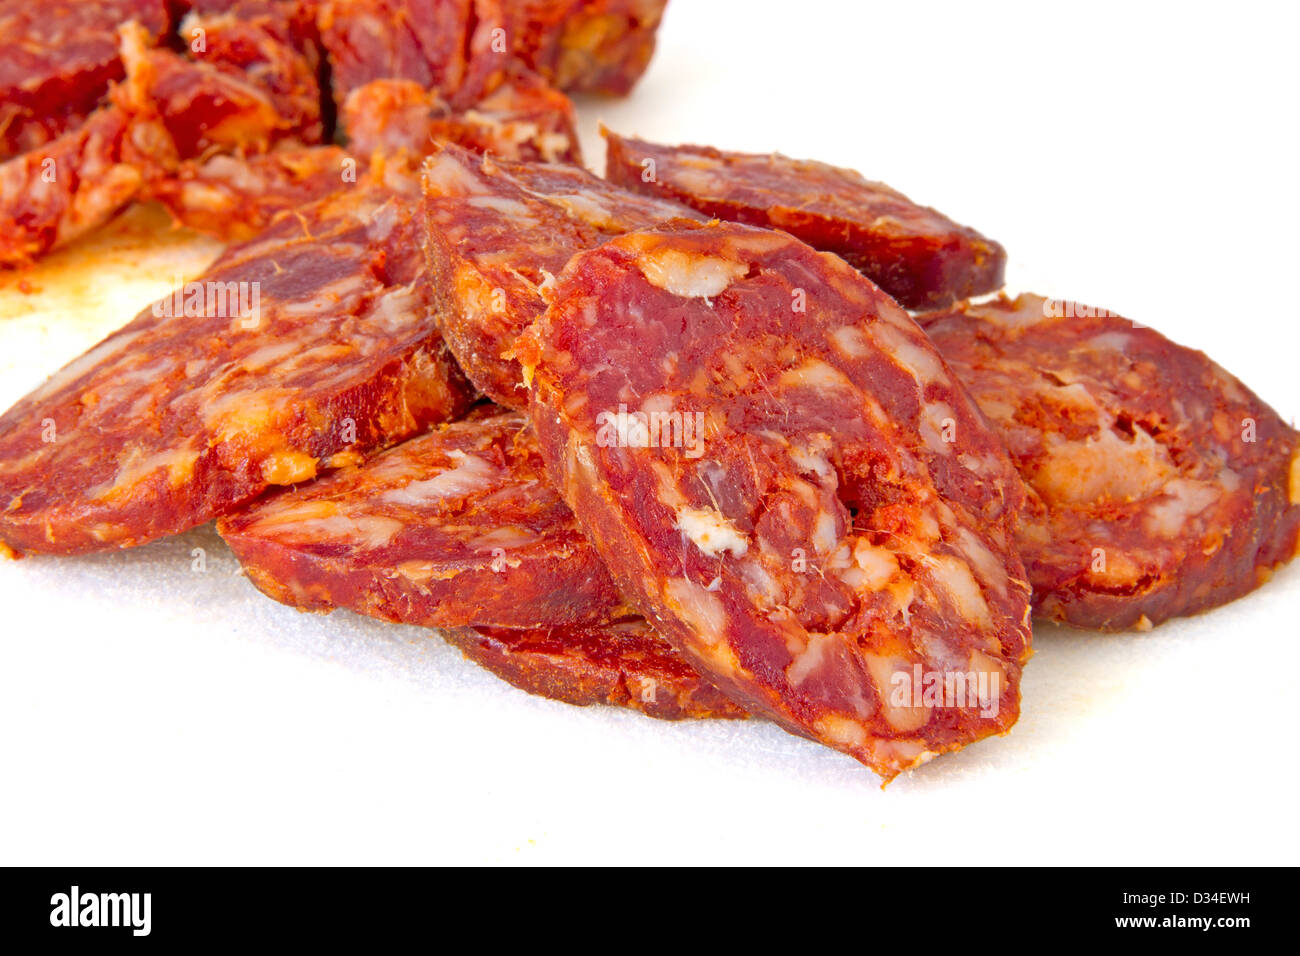 Iberian pork sausage on a cutting board Stock Photo